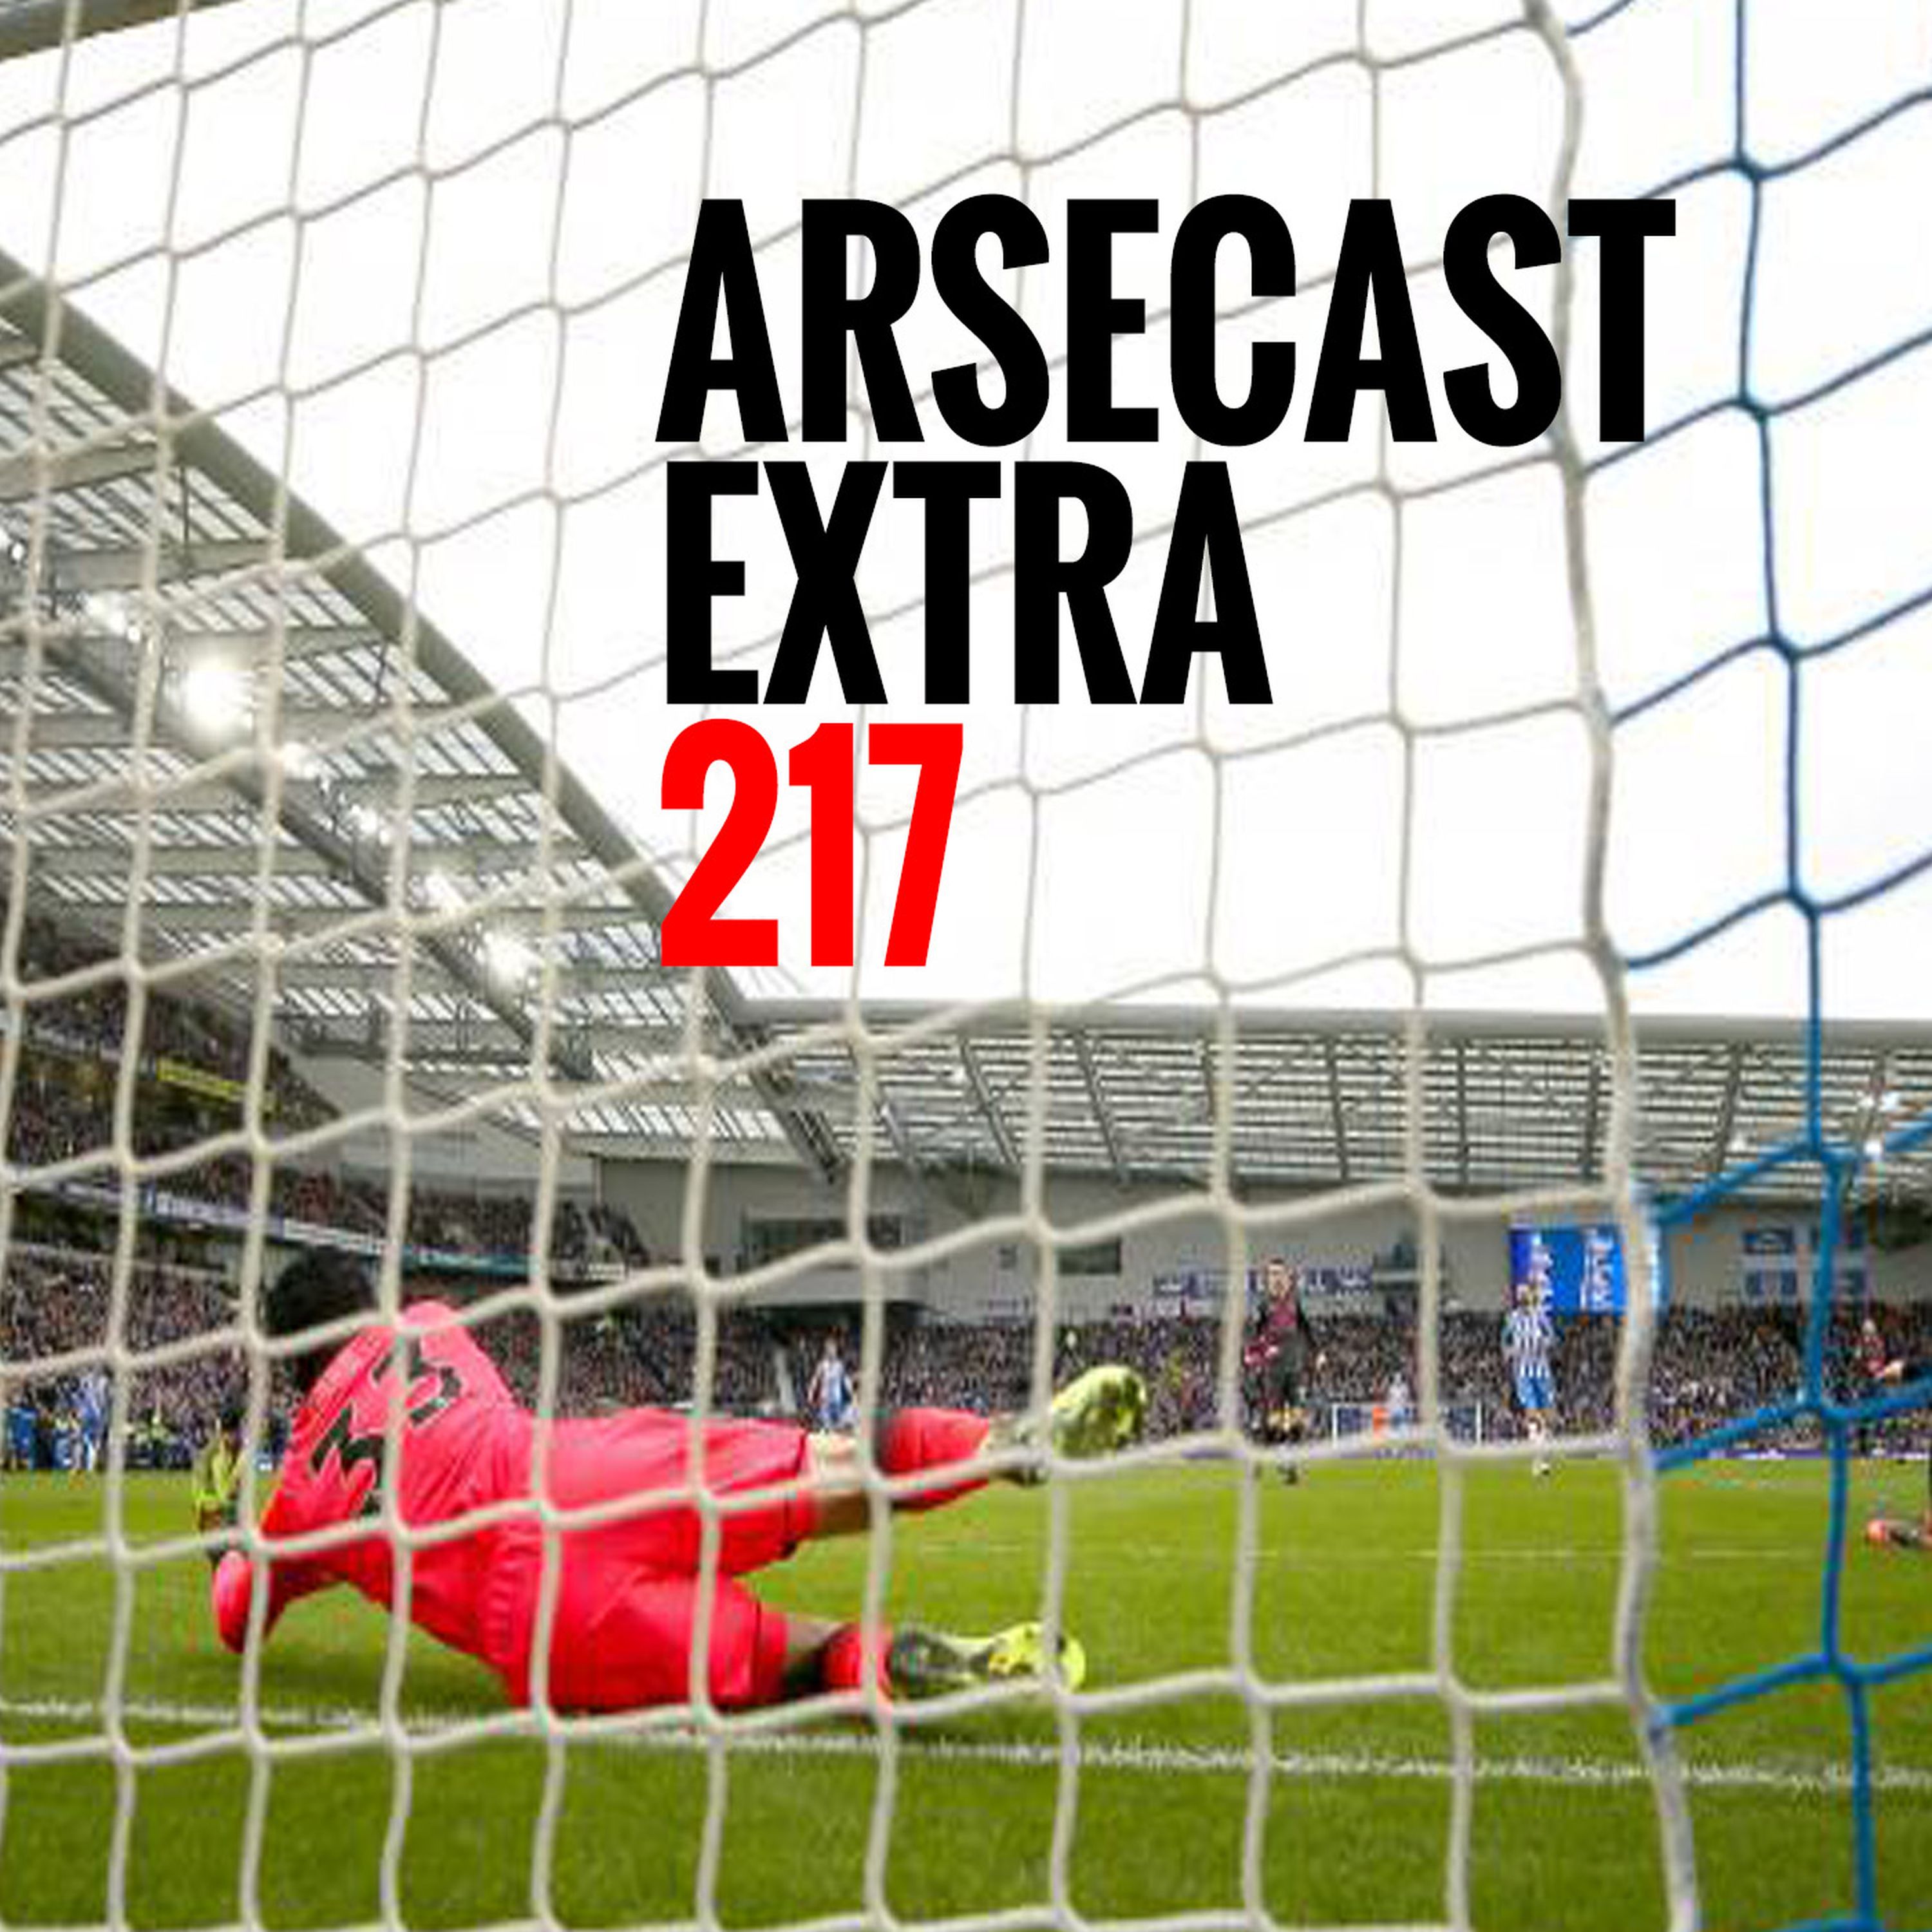 Arsecast Extra Episode 217 - 05.03.2018